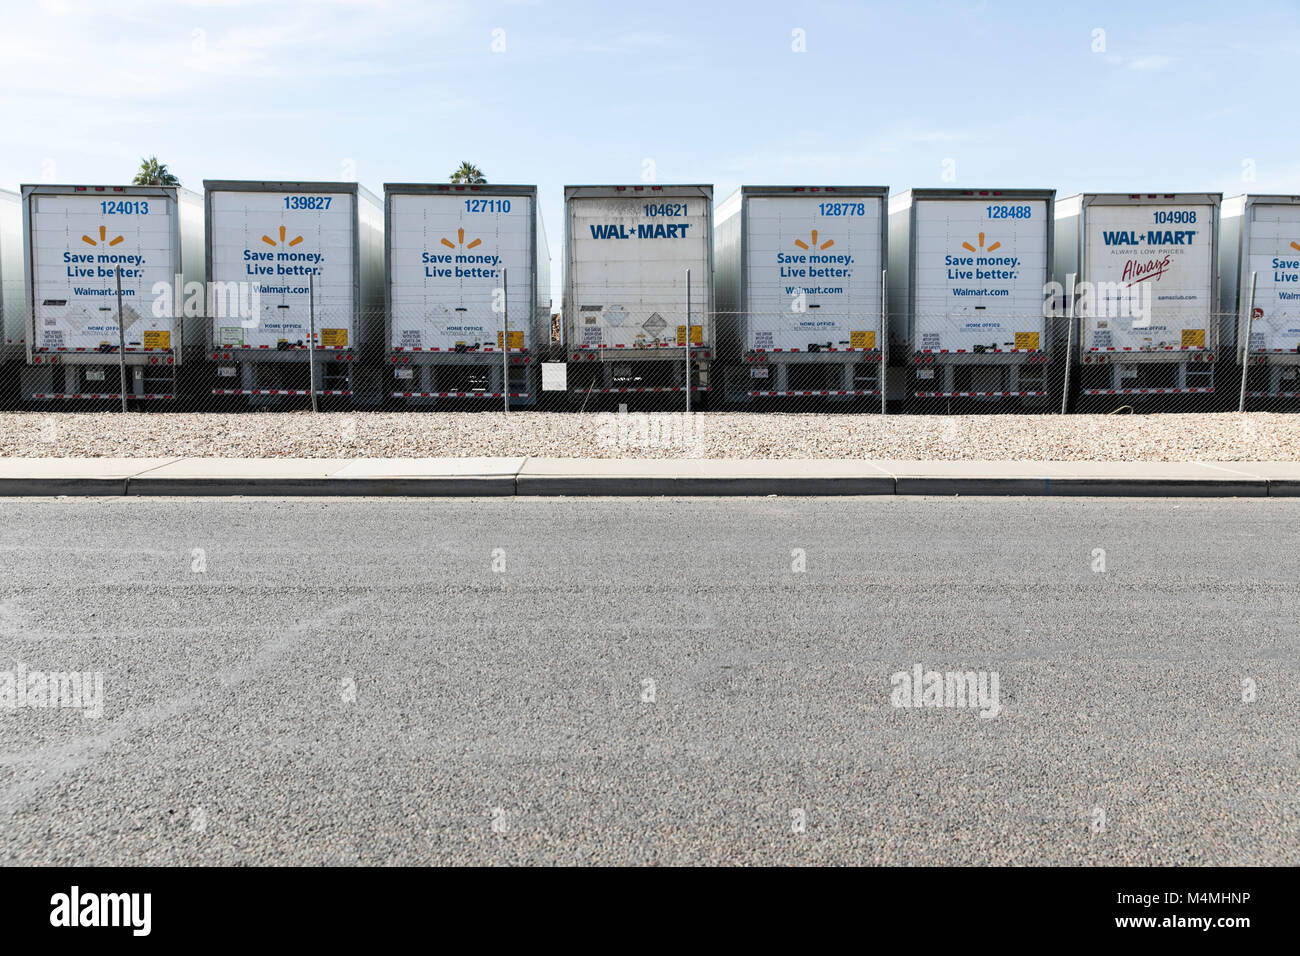 Walmart Inc., logos on a row of semi-truck trailers in Phoenix, Arizona, on February 4, 2018. Stock Photo